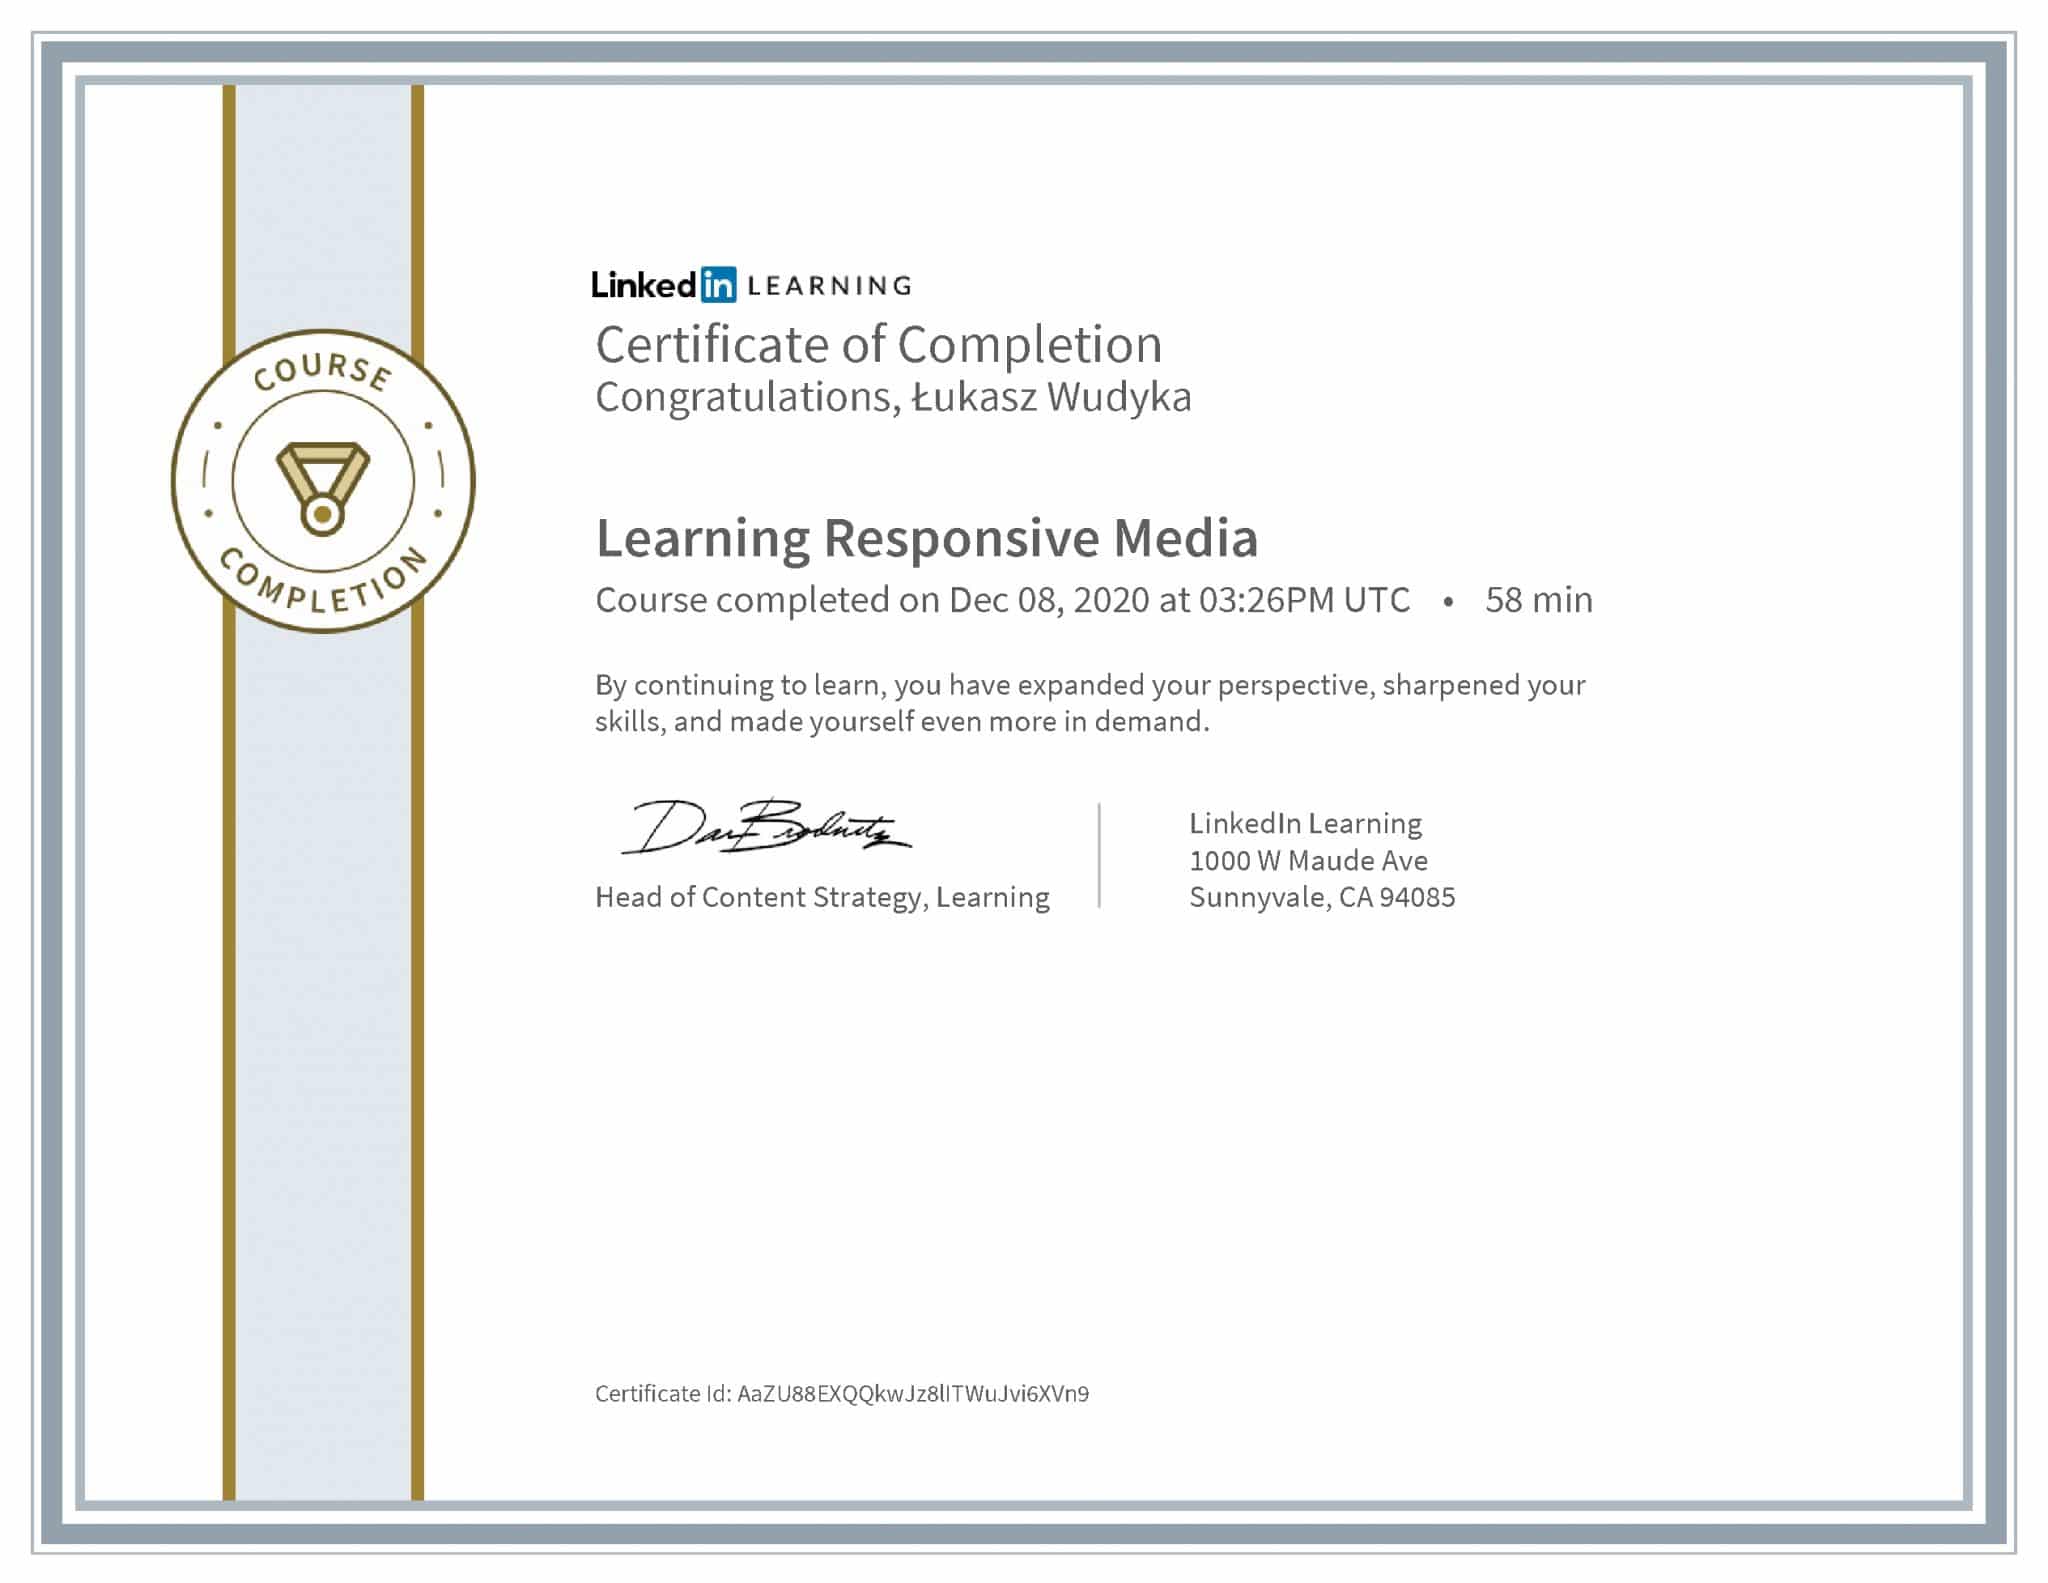 Łukasz Wudyka certyfikat LinkedIn Learning Responsive Media